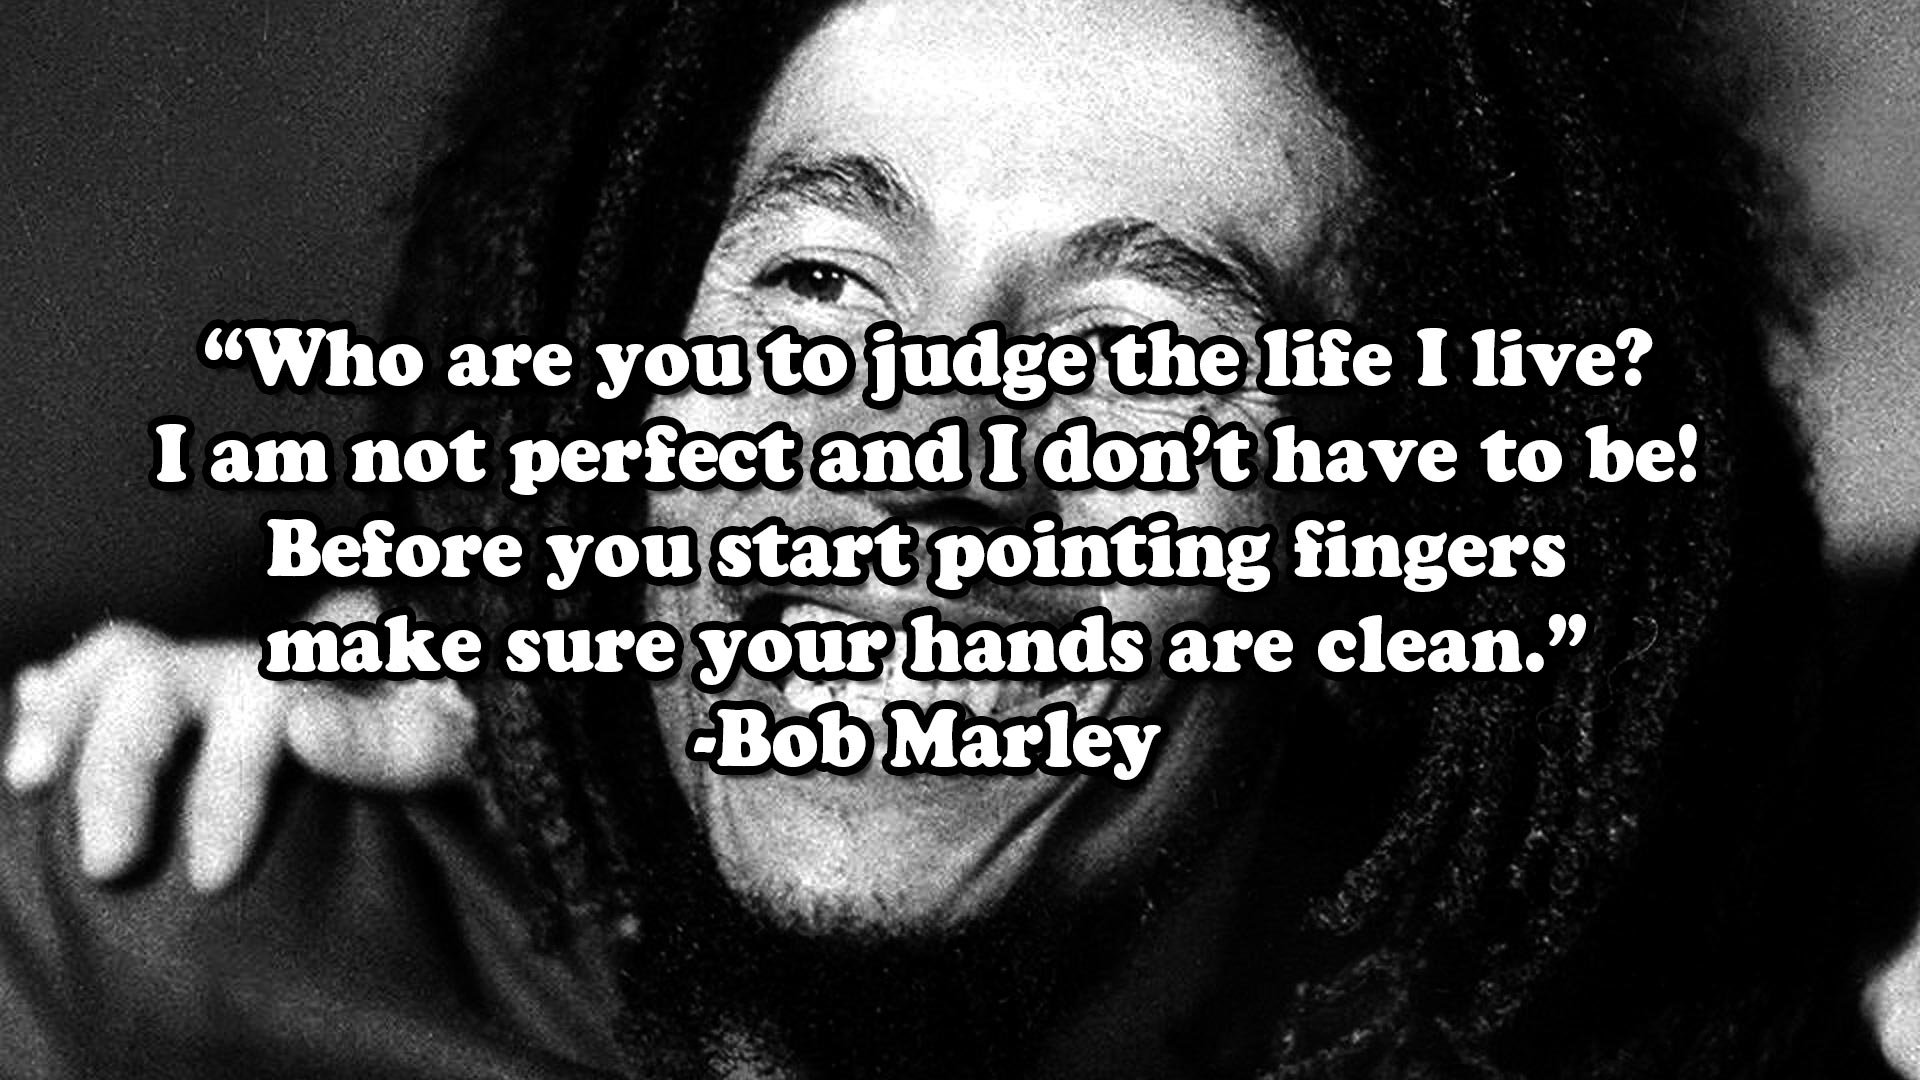 Bob Marley reggae singer marijuana 420 quote sadic mood anarchy